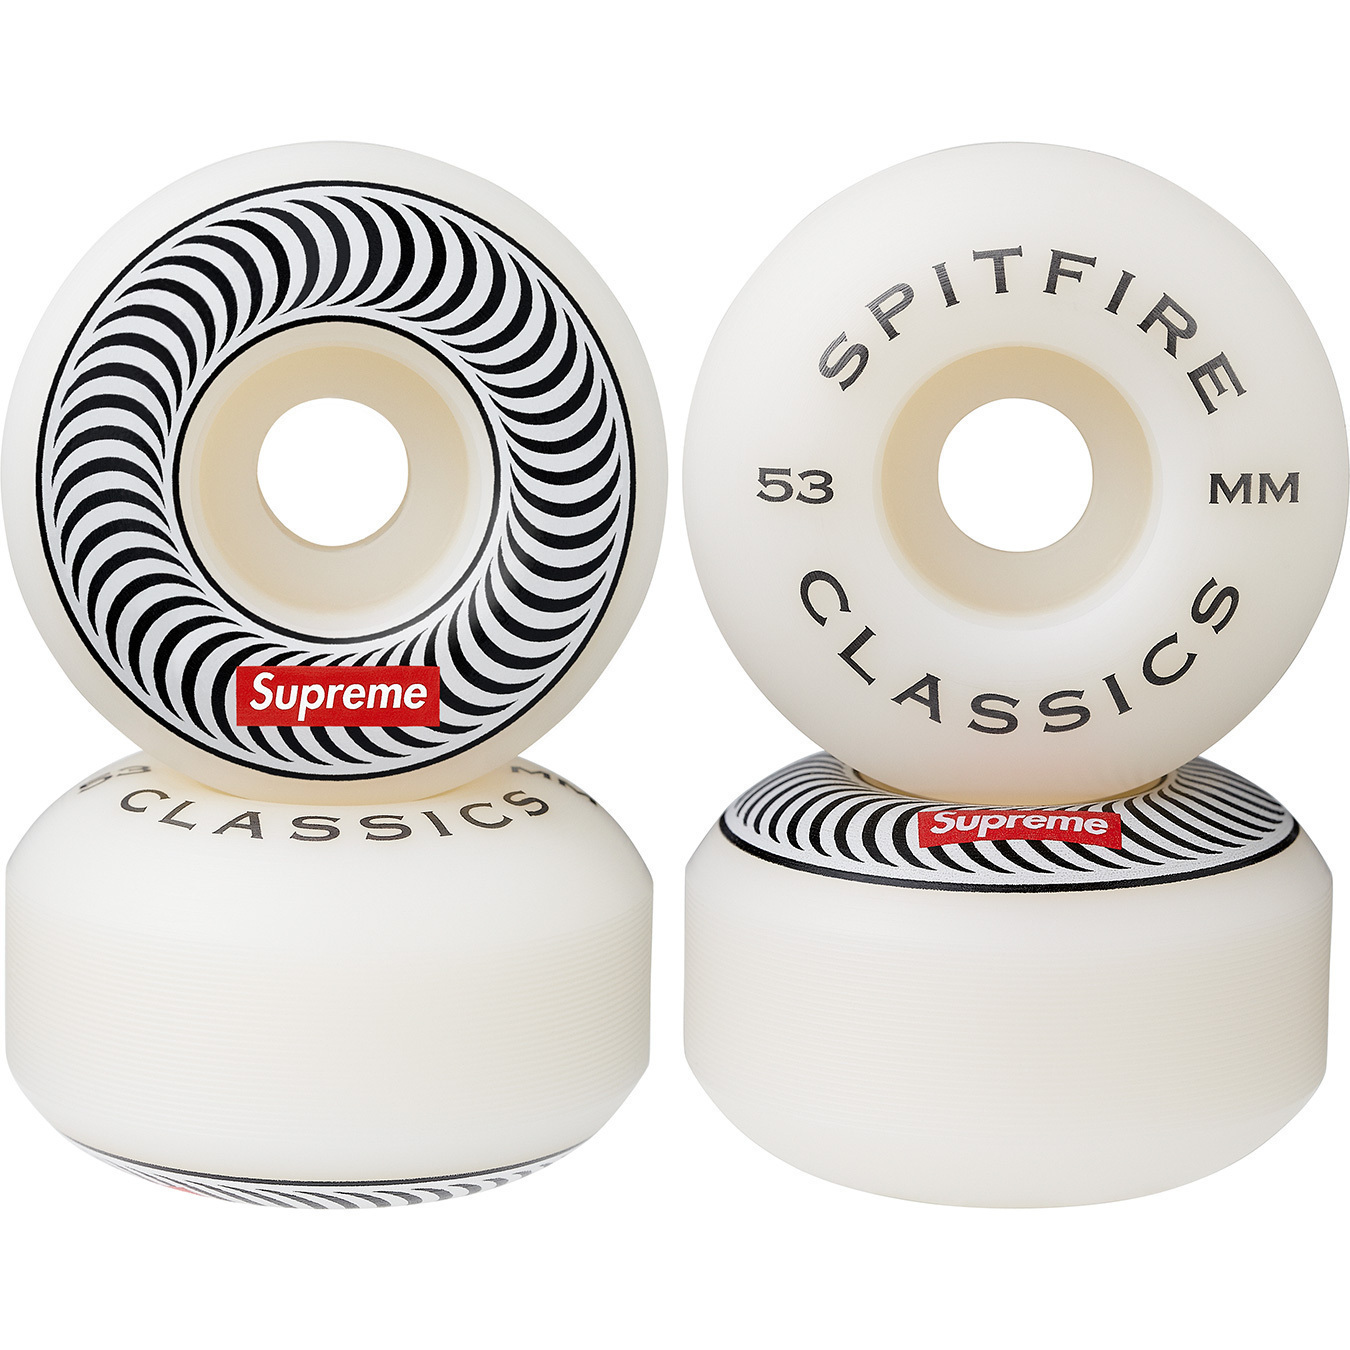 Supreme®/Spitfire® Classic Wheels (Set of 4)